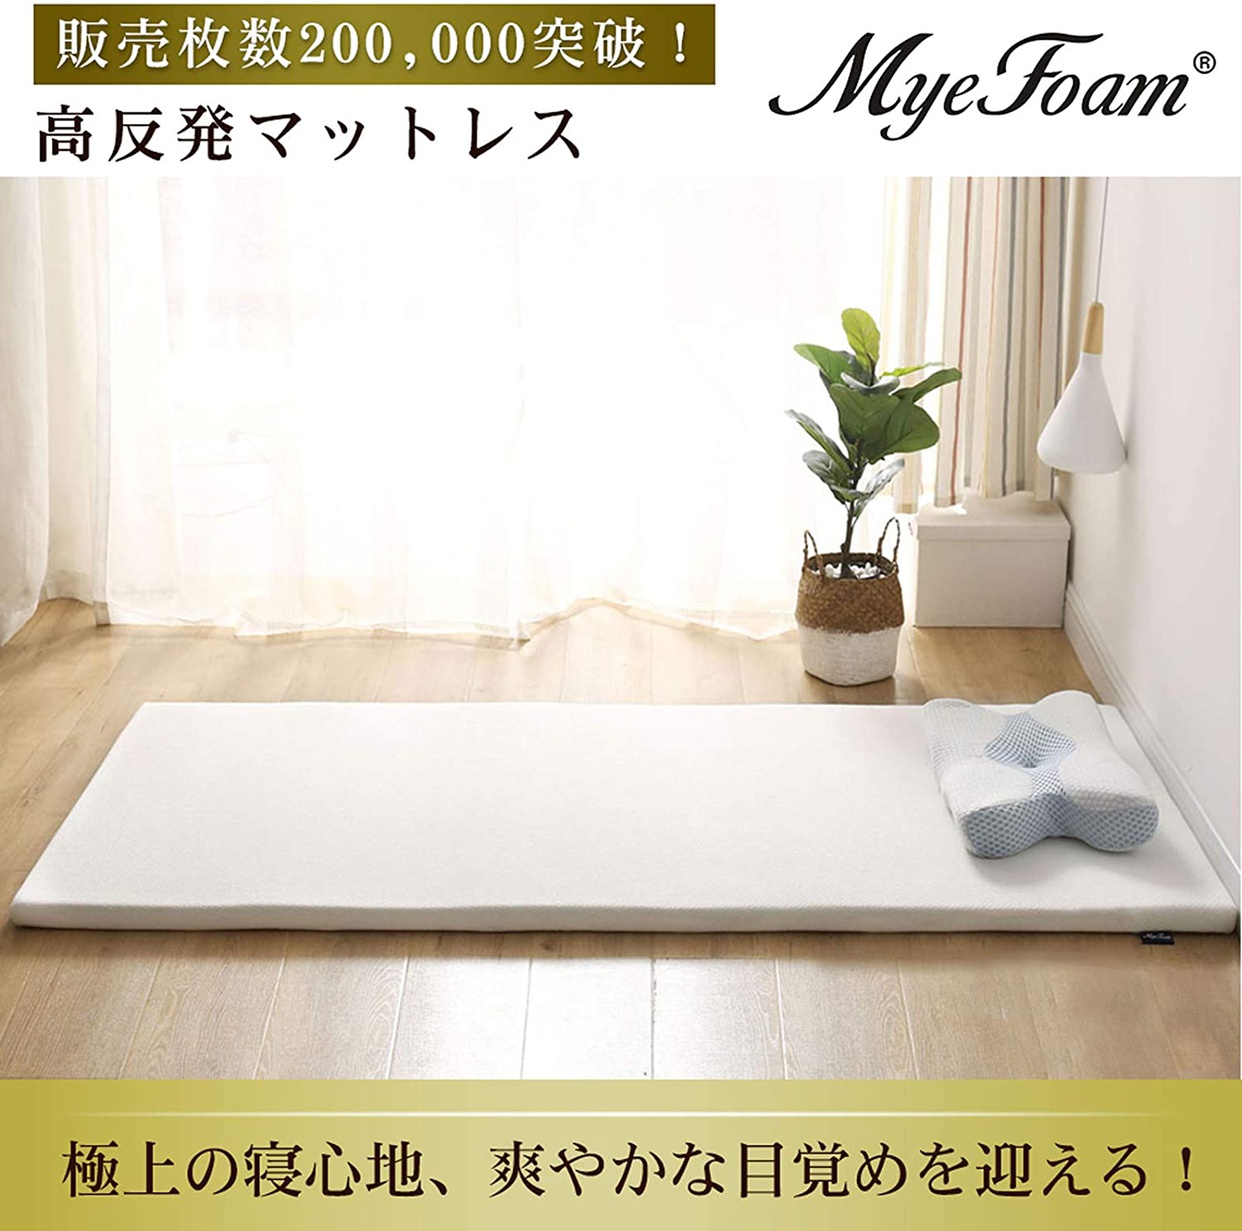 MyeFoam(マイイーフォーム) マットレスの商品画像2 